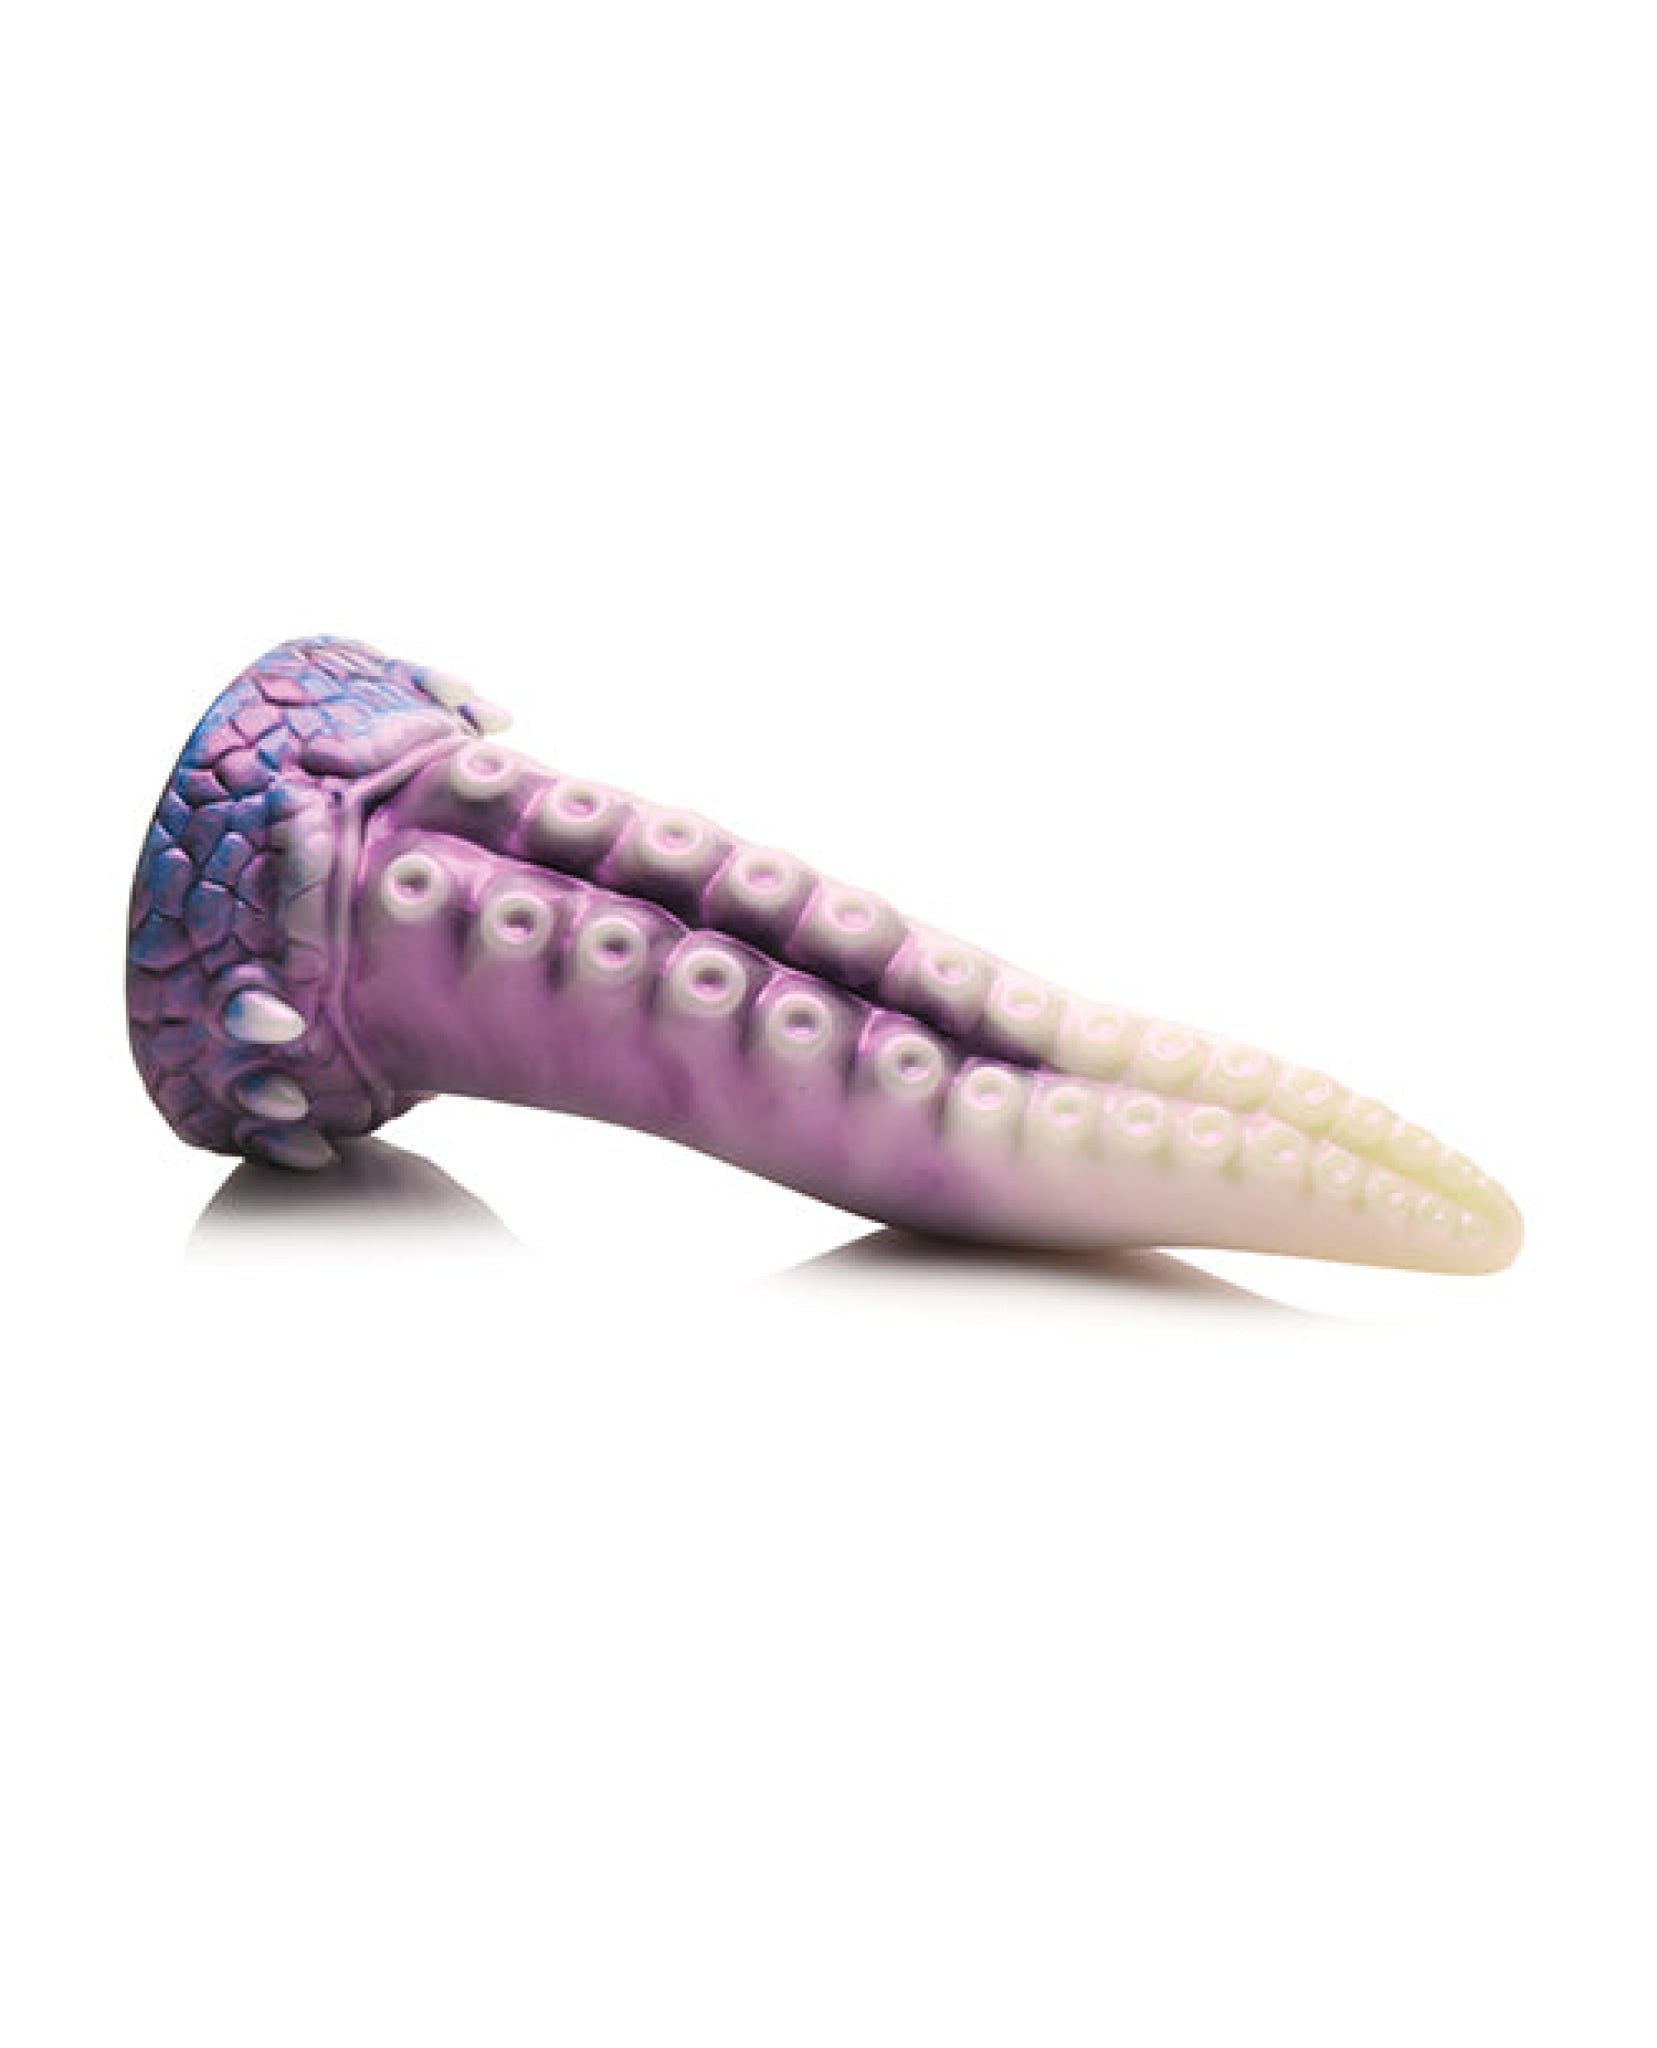 Creature Cocks Astropus Tentacle Silicone Dildo - Purple/White Xr LLC